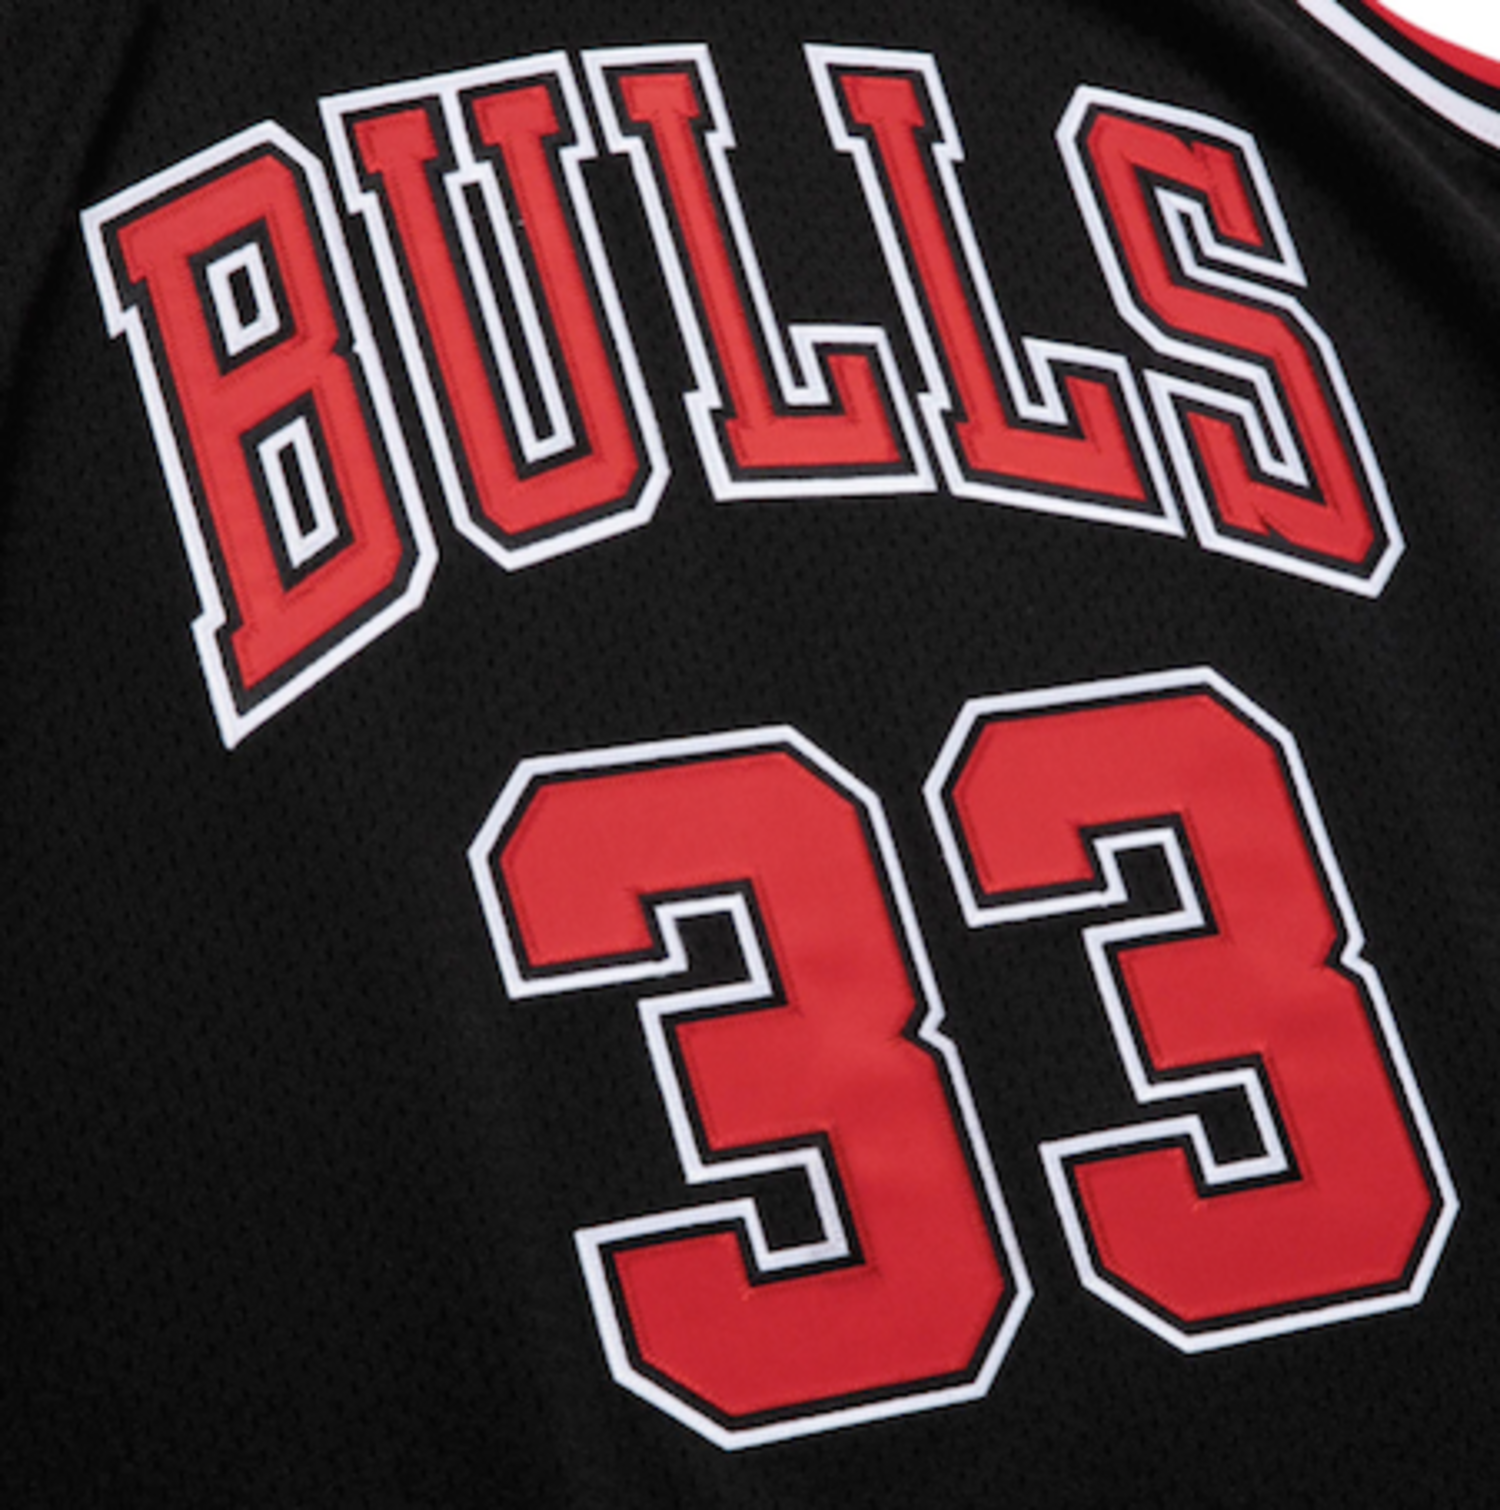 1997-98 – Chicago Bulls History